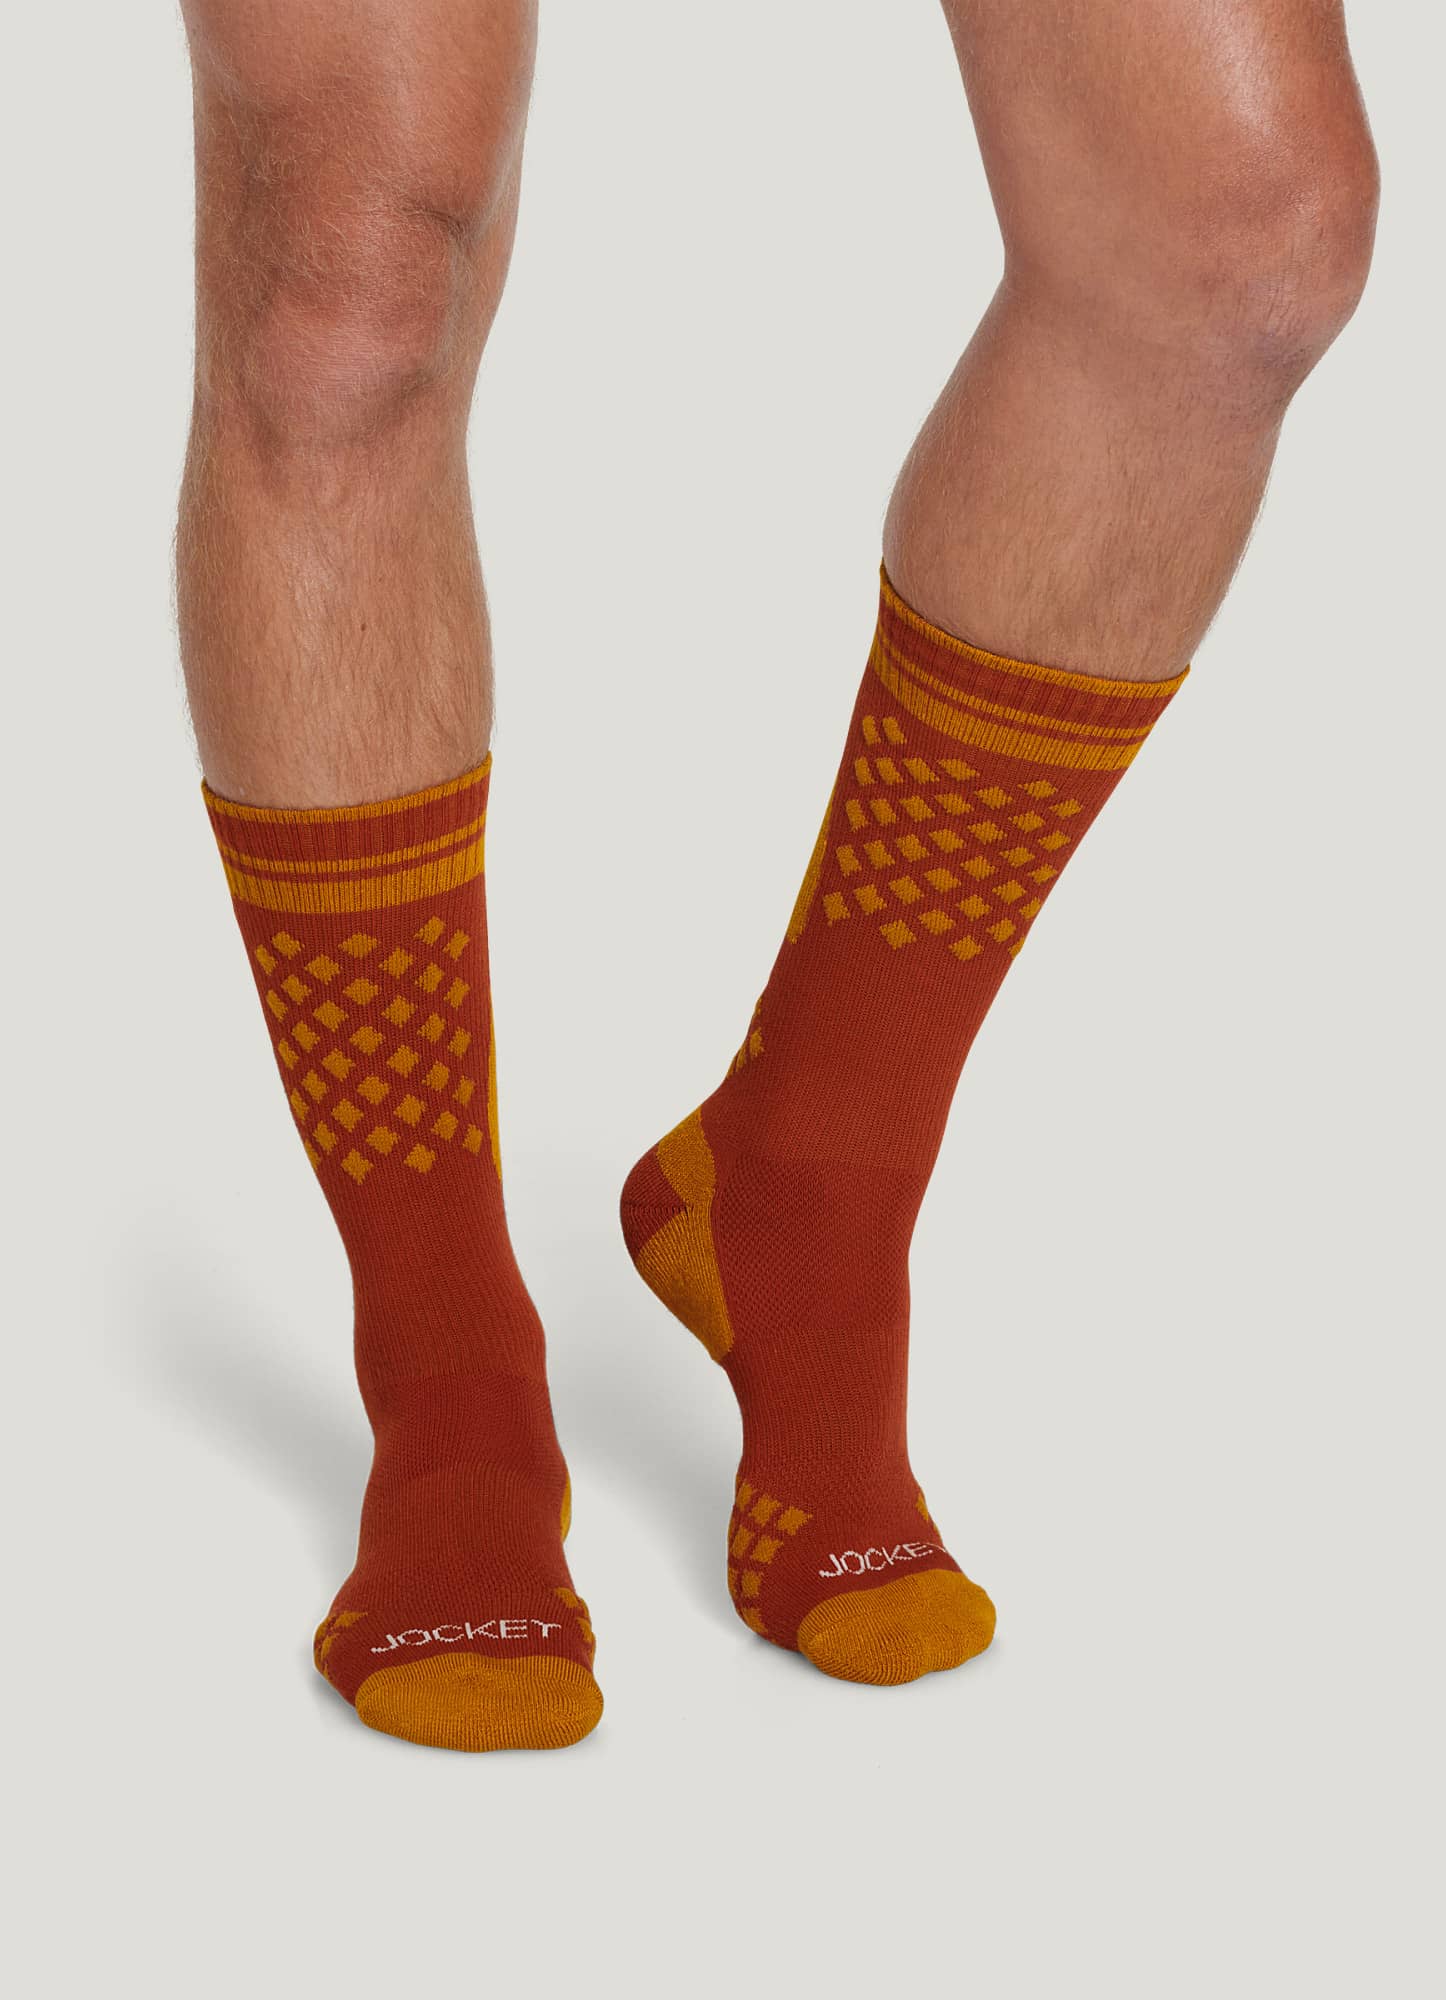 Gentle Grip® - Socks made for comfort™ 